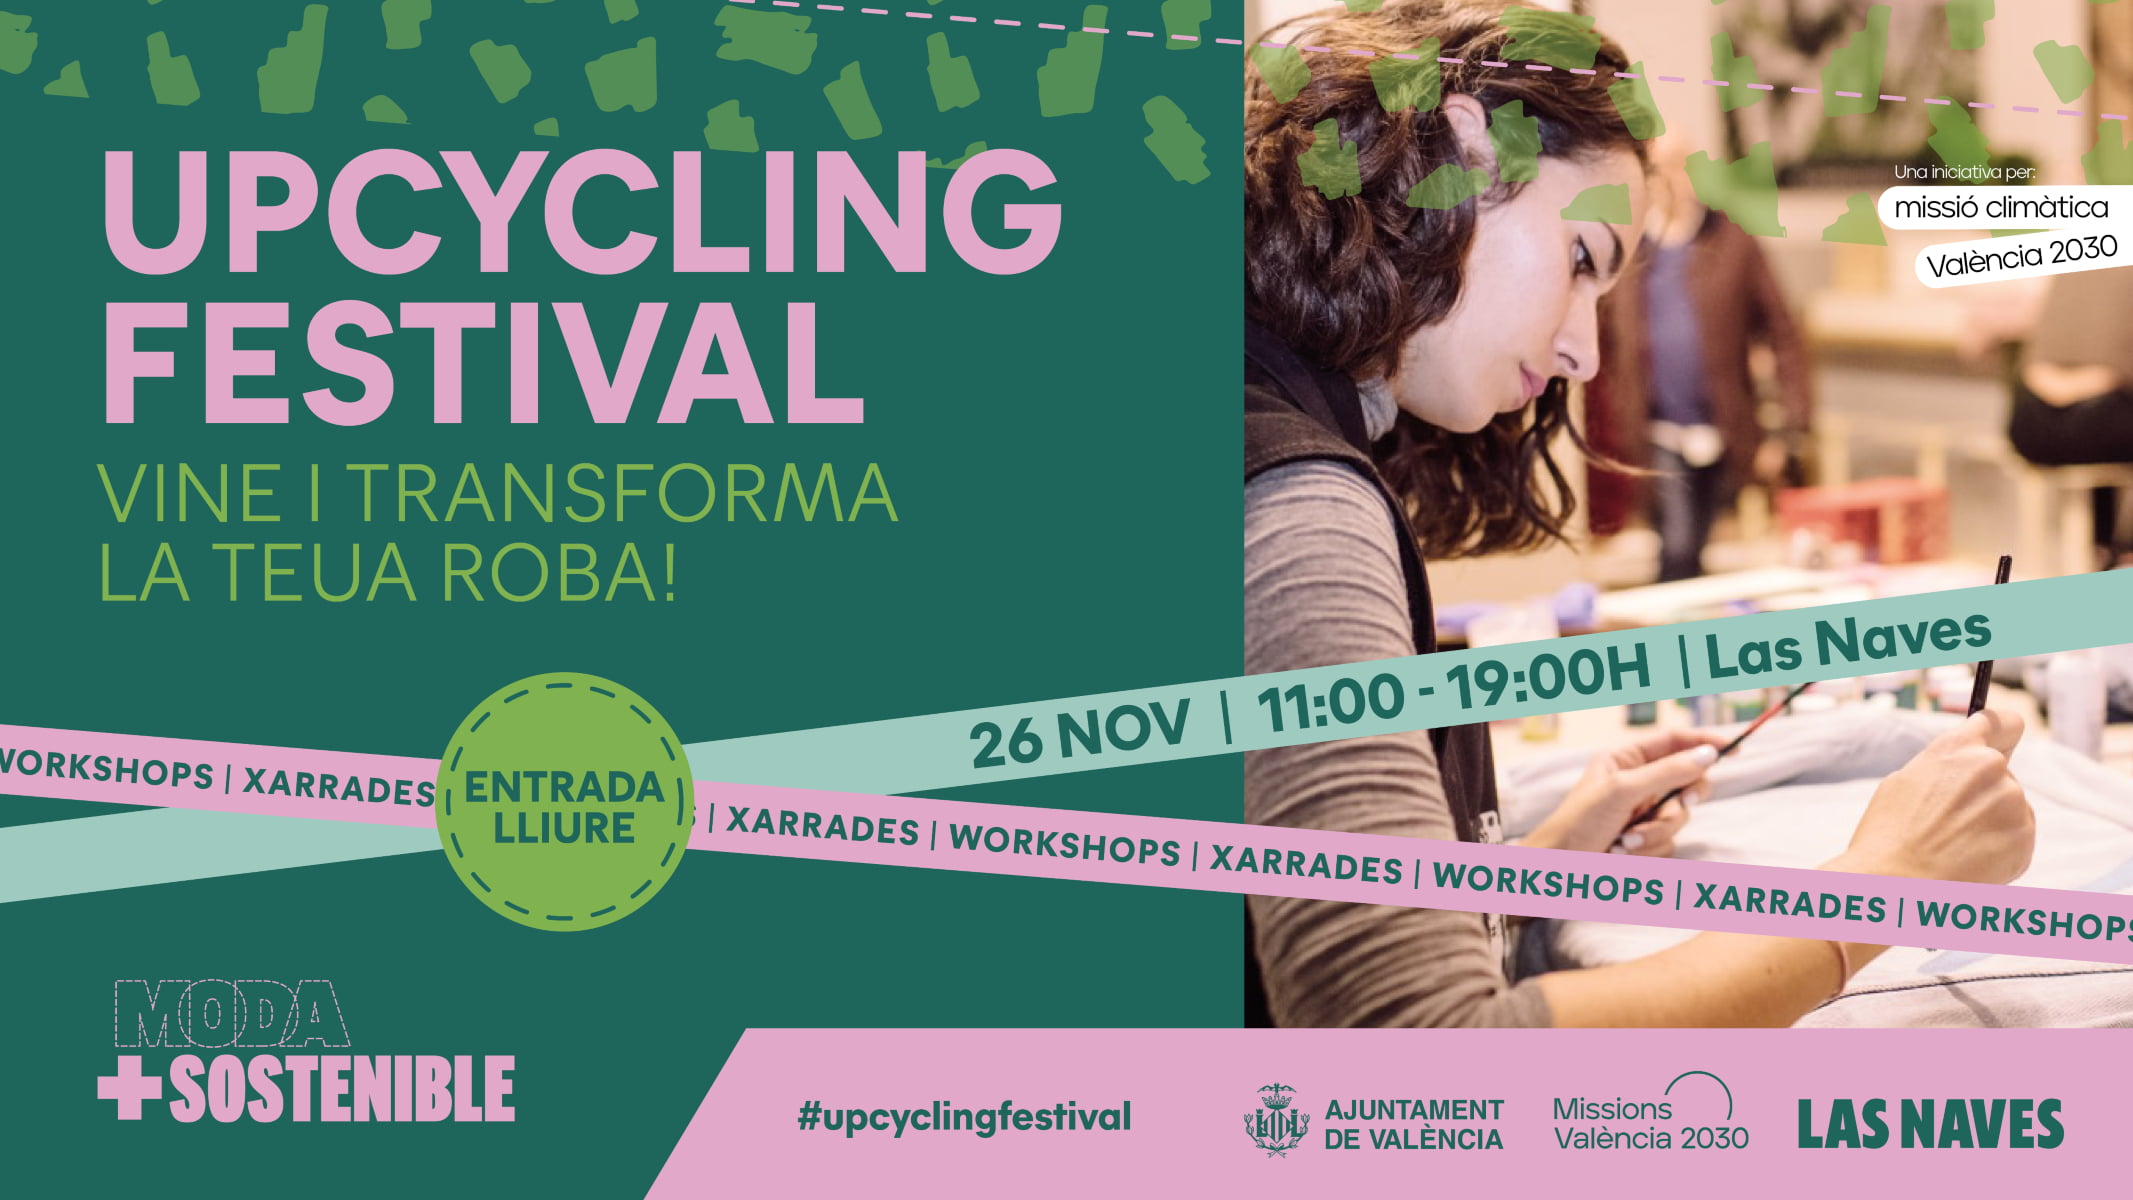 Upcycling Festival